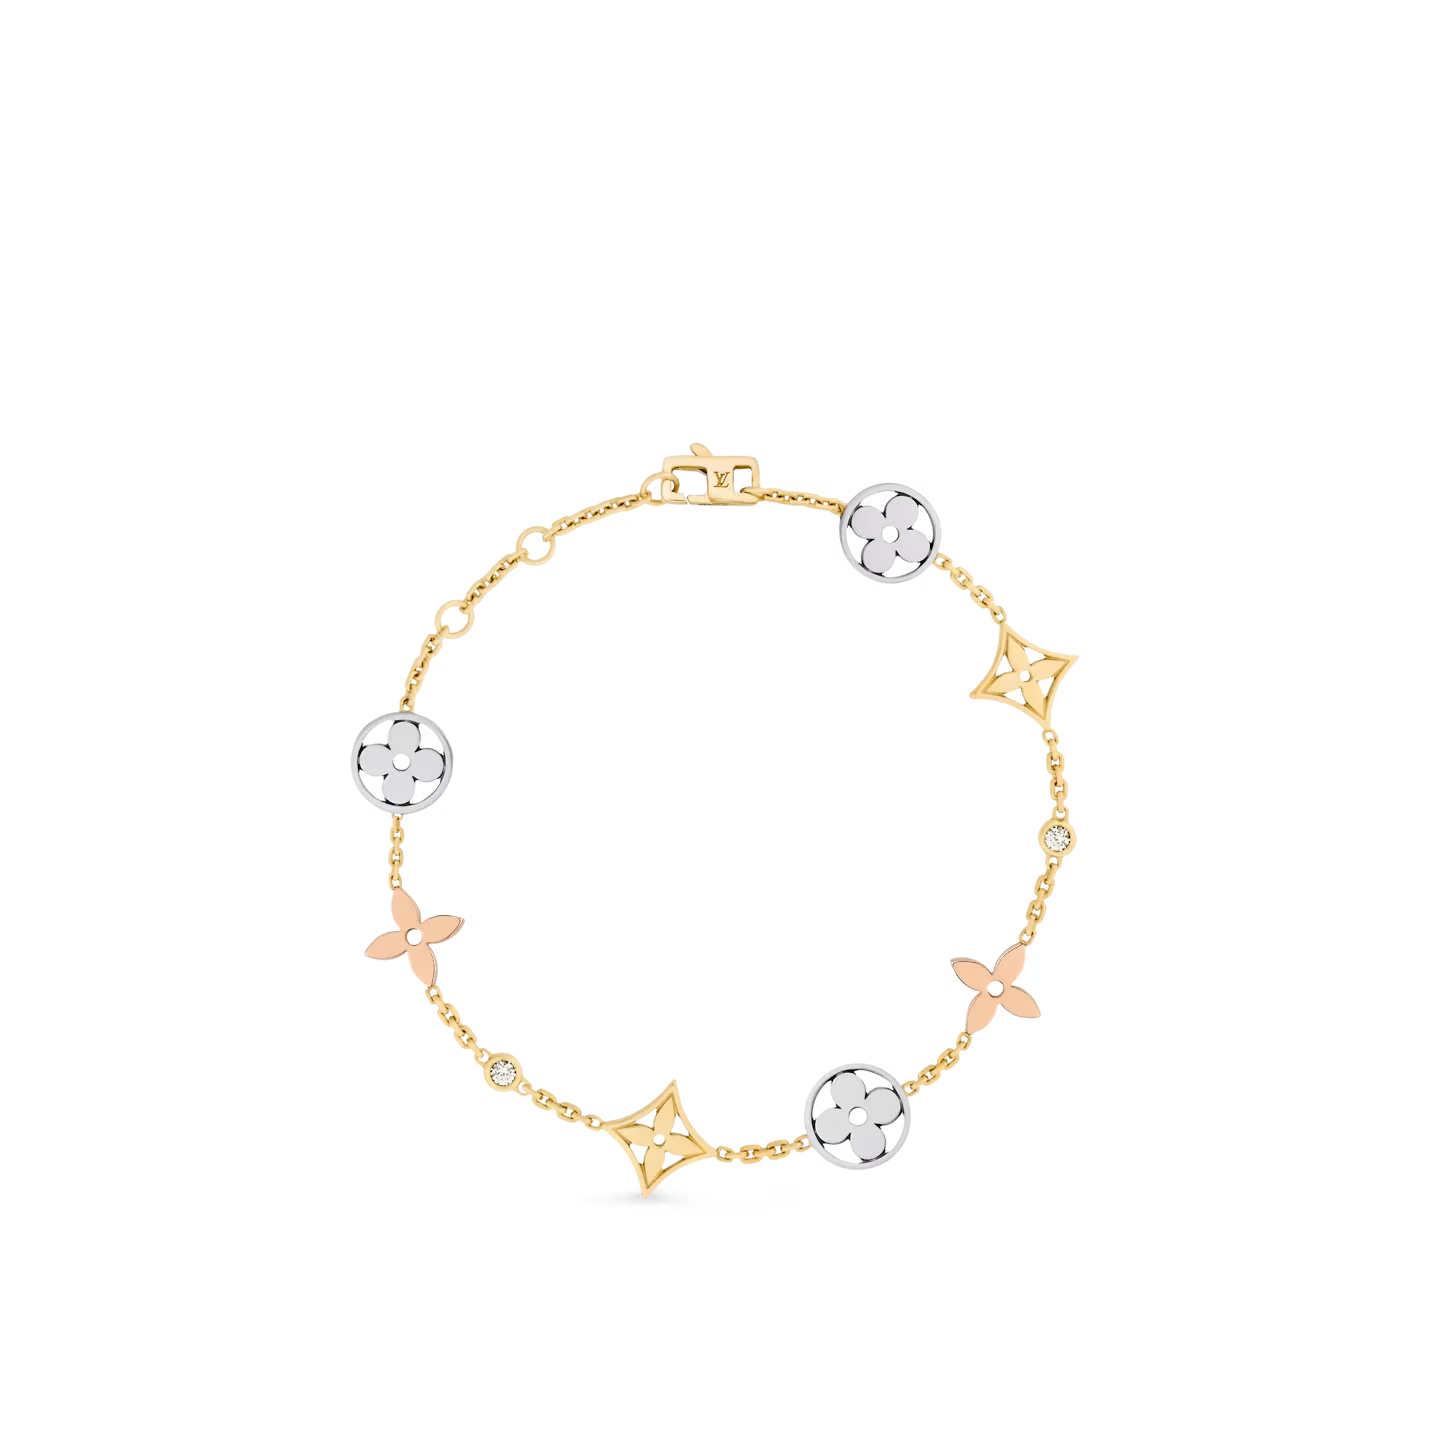 Replica LV Louis Vuitton Idylle Blossom bracelet, 3 golds and diamonds